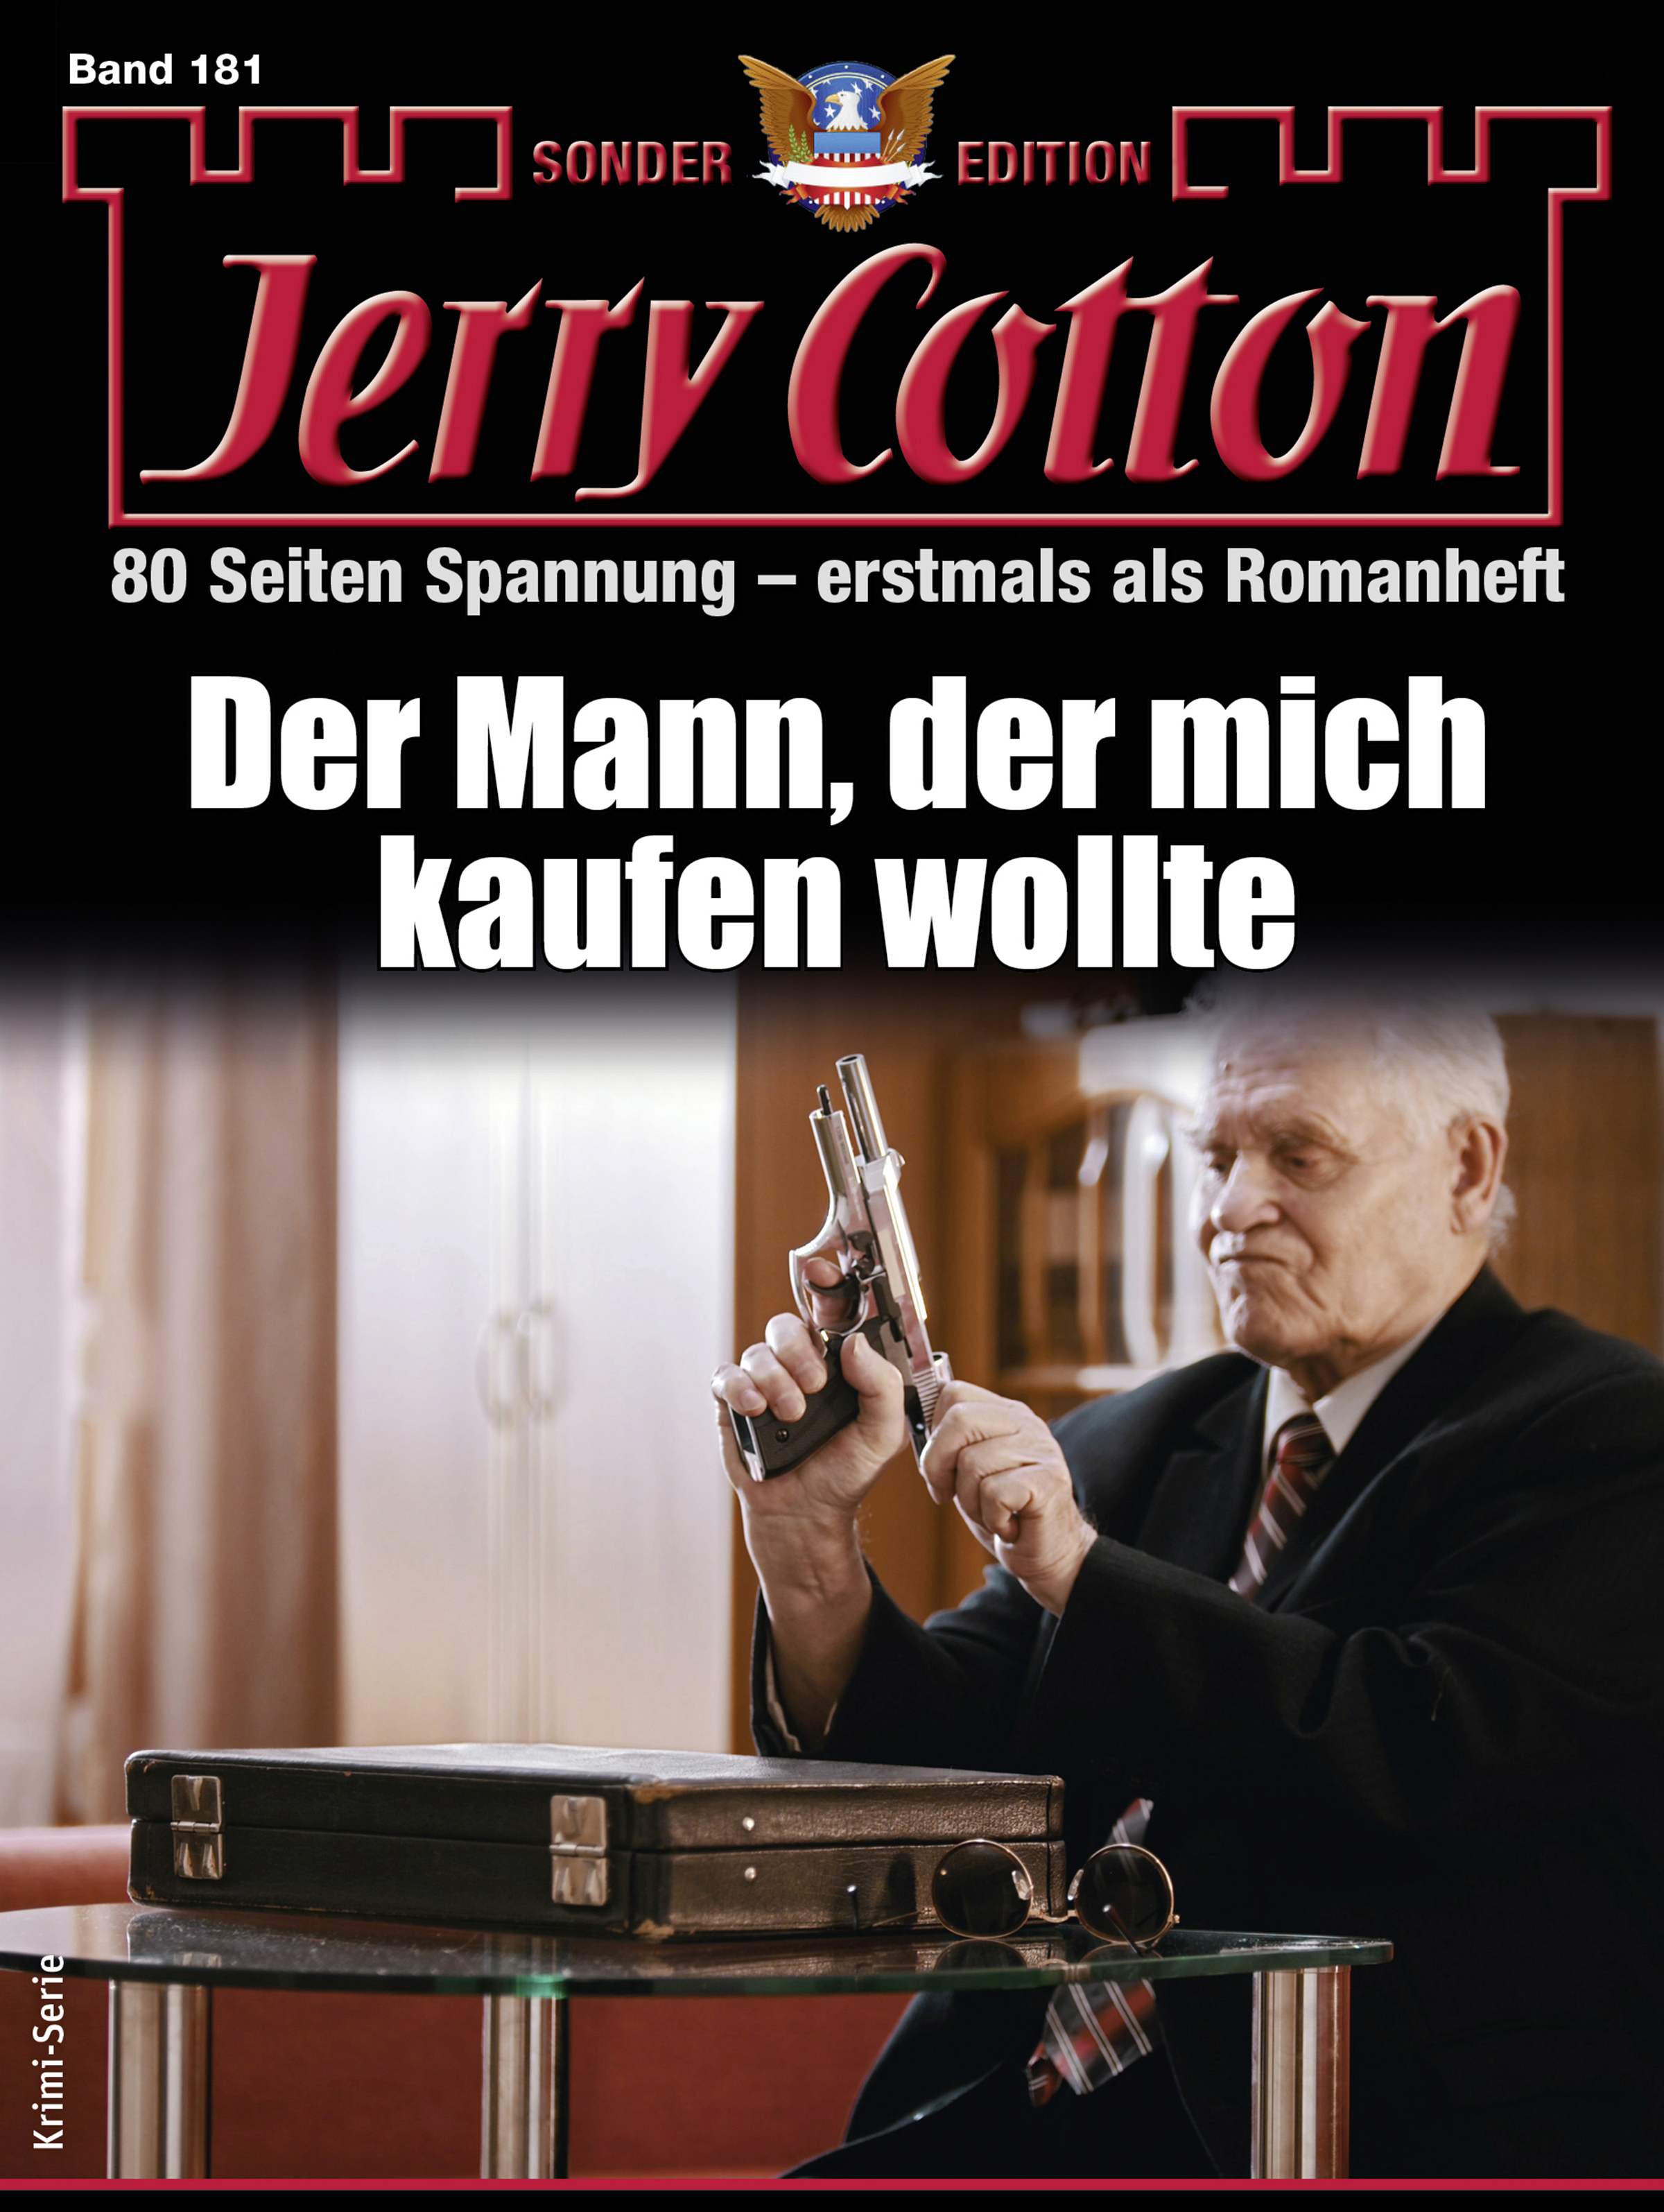 Jerry Cotton Sonder-Edition 181